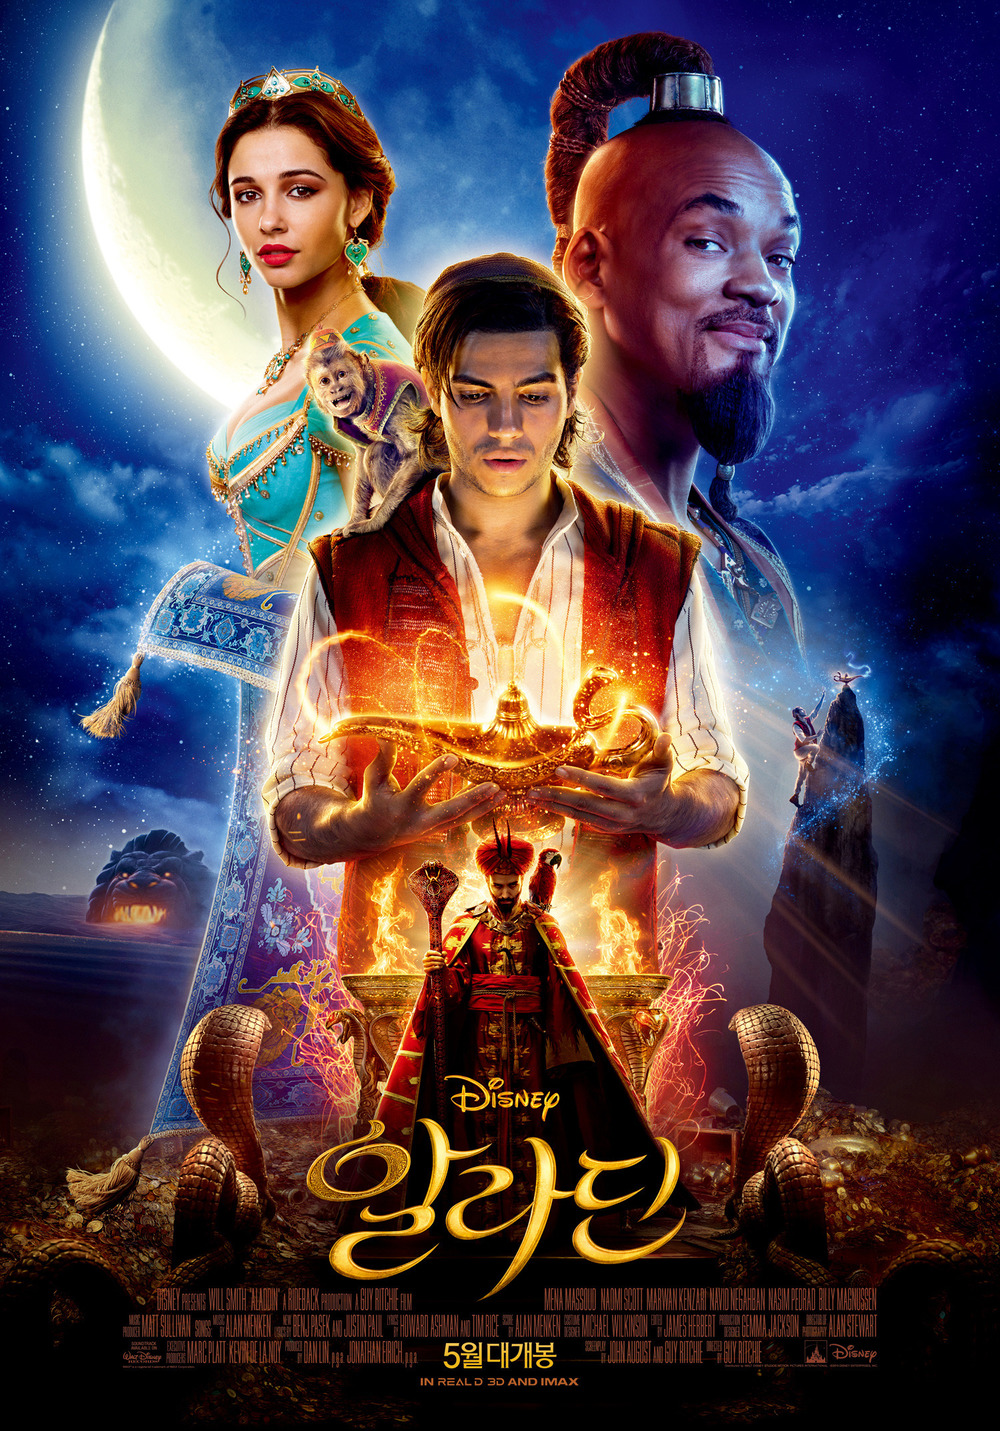 Aladdin Dvd Release Date Redbox Netflix Itunes Amazon